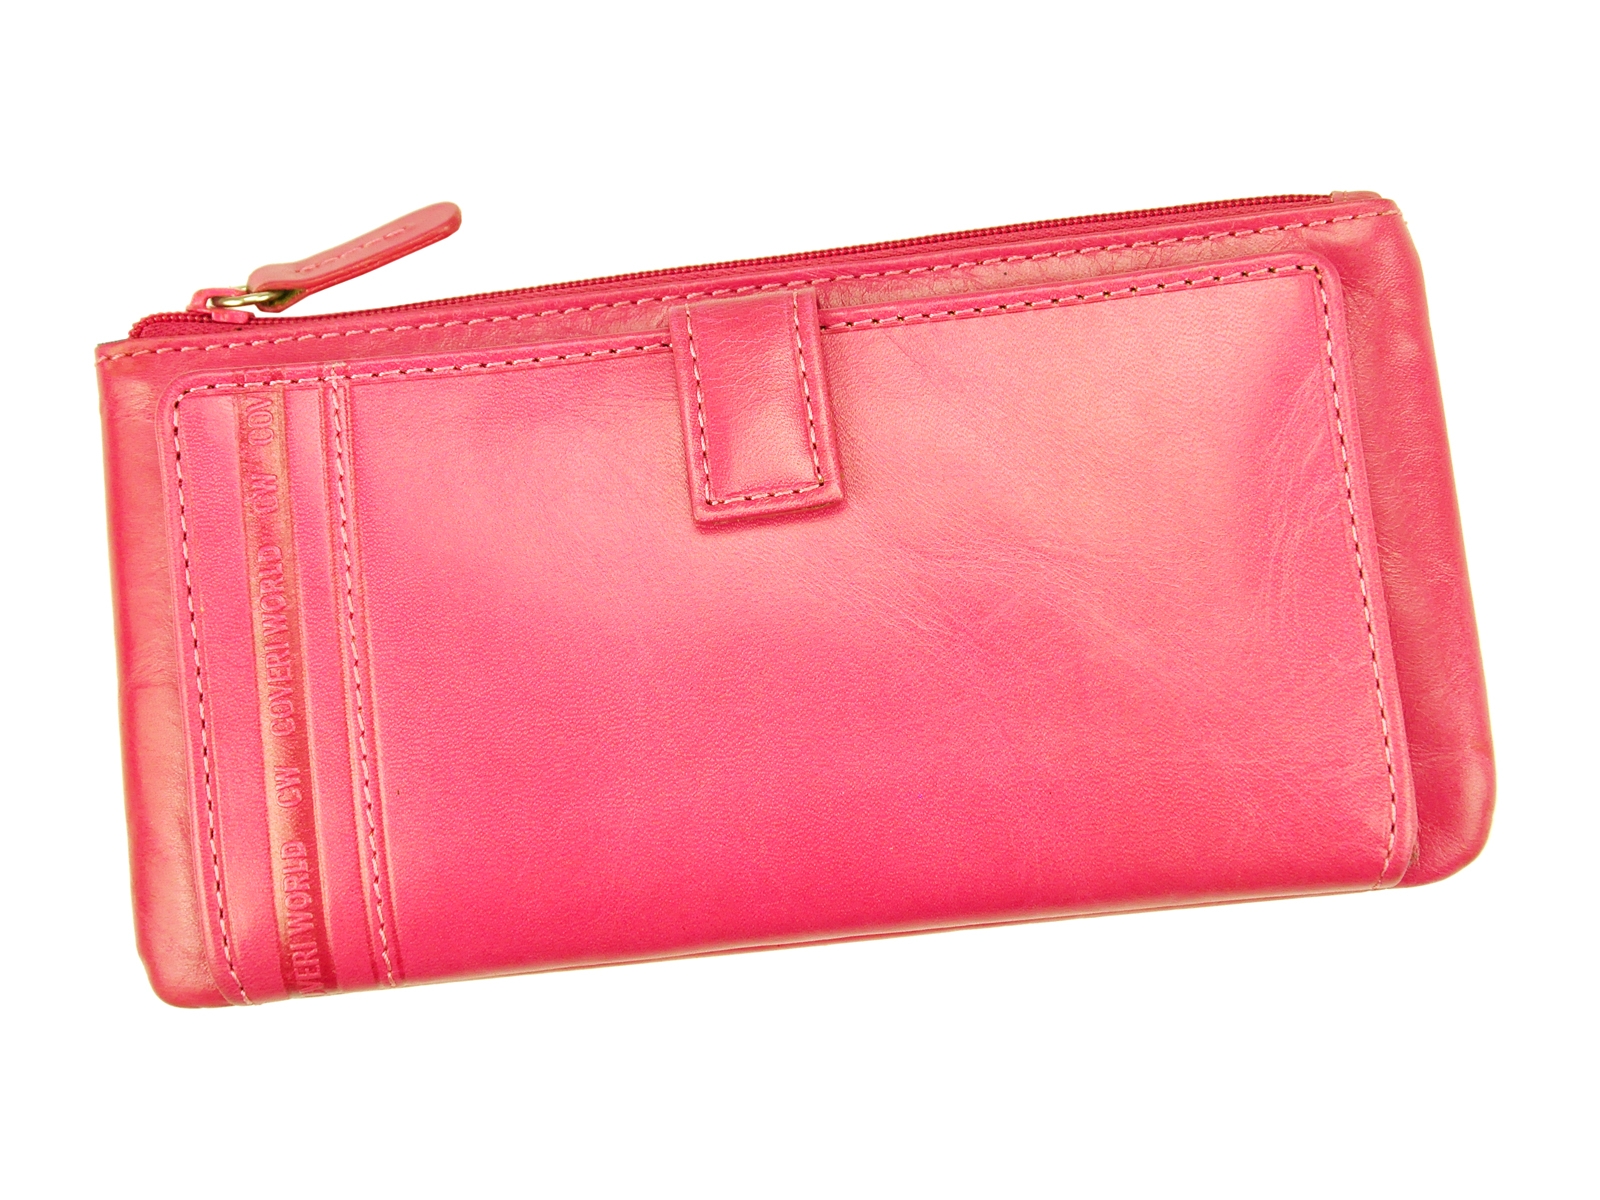 Coveri World Soft Genuine Leather Women Wallet/Purse Pink 518 G02 – www.cinemas93.org